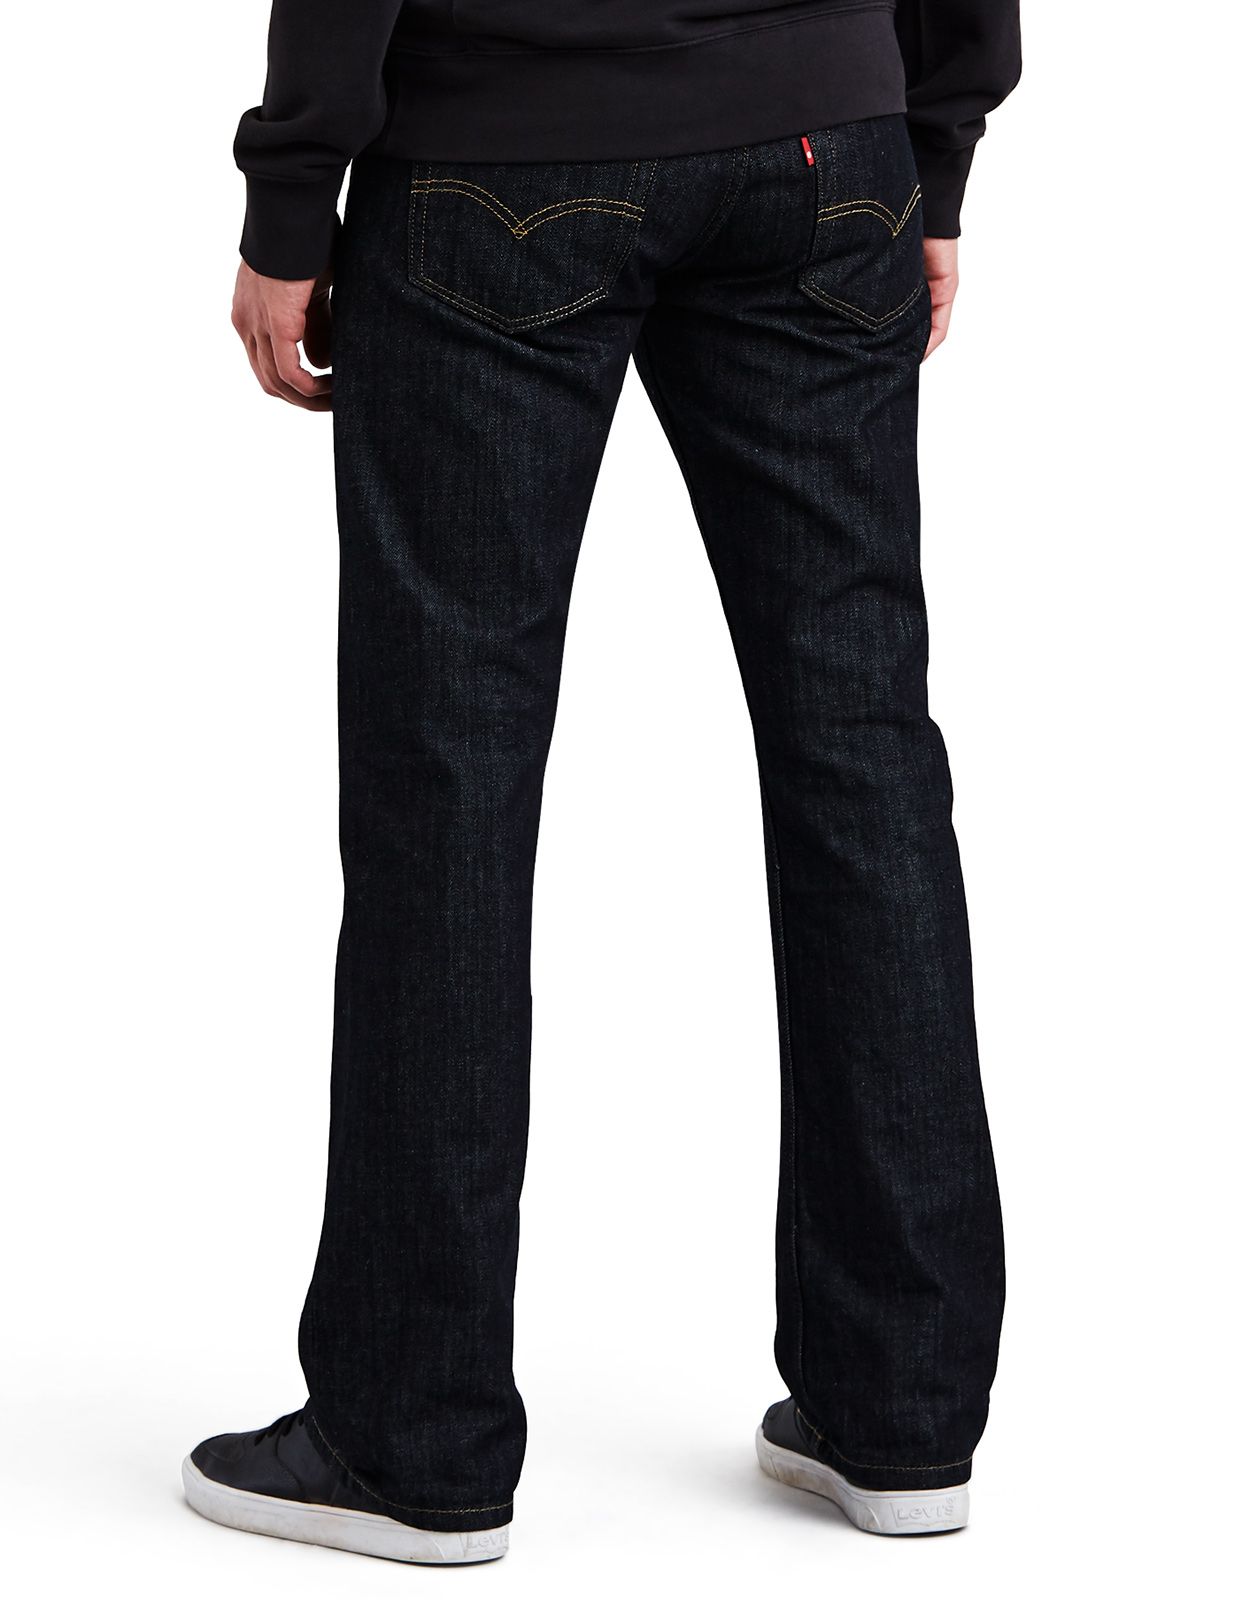 Levi's Men's 527 Low Rise Slim Fit Boot Cut Jeans - Tumbled Rigid